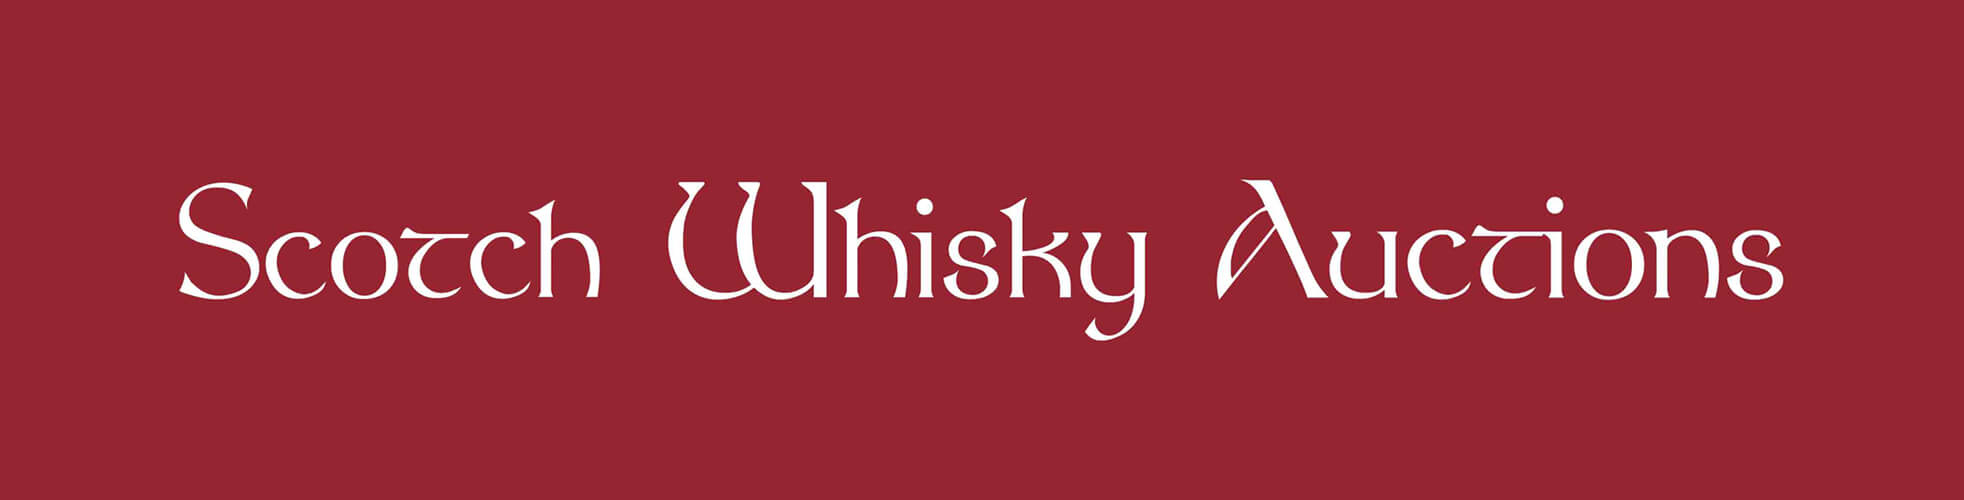 Scotch Whisky Auctions logo